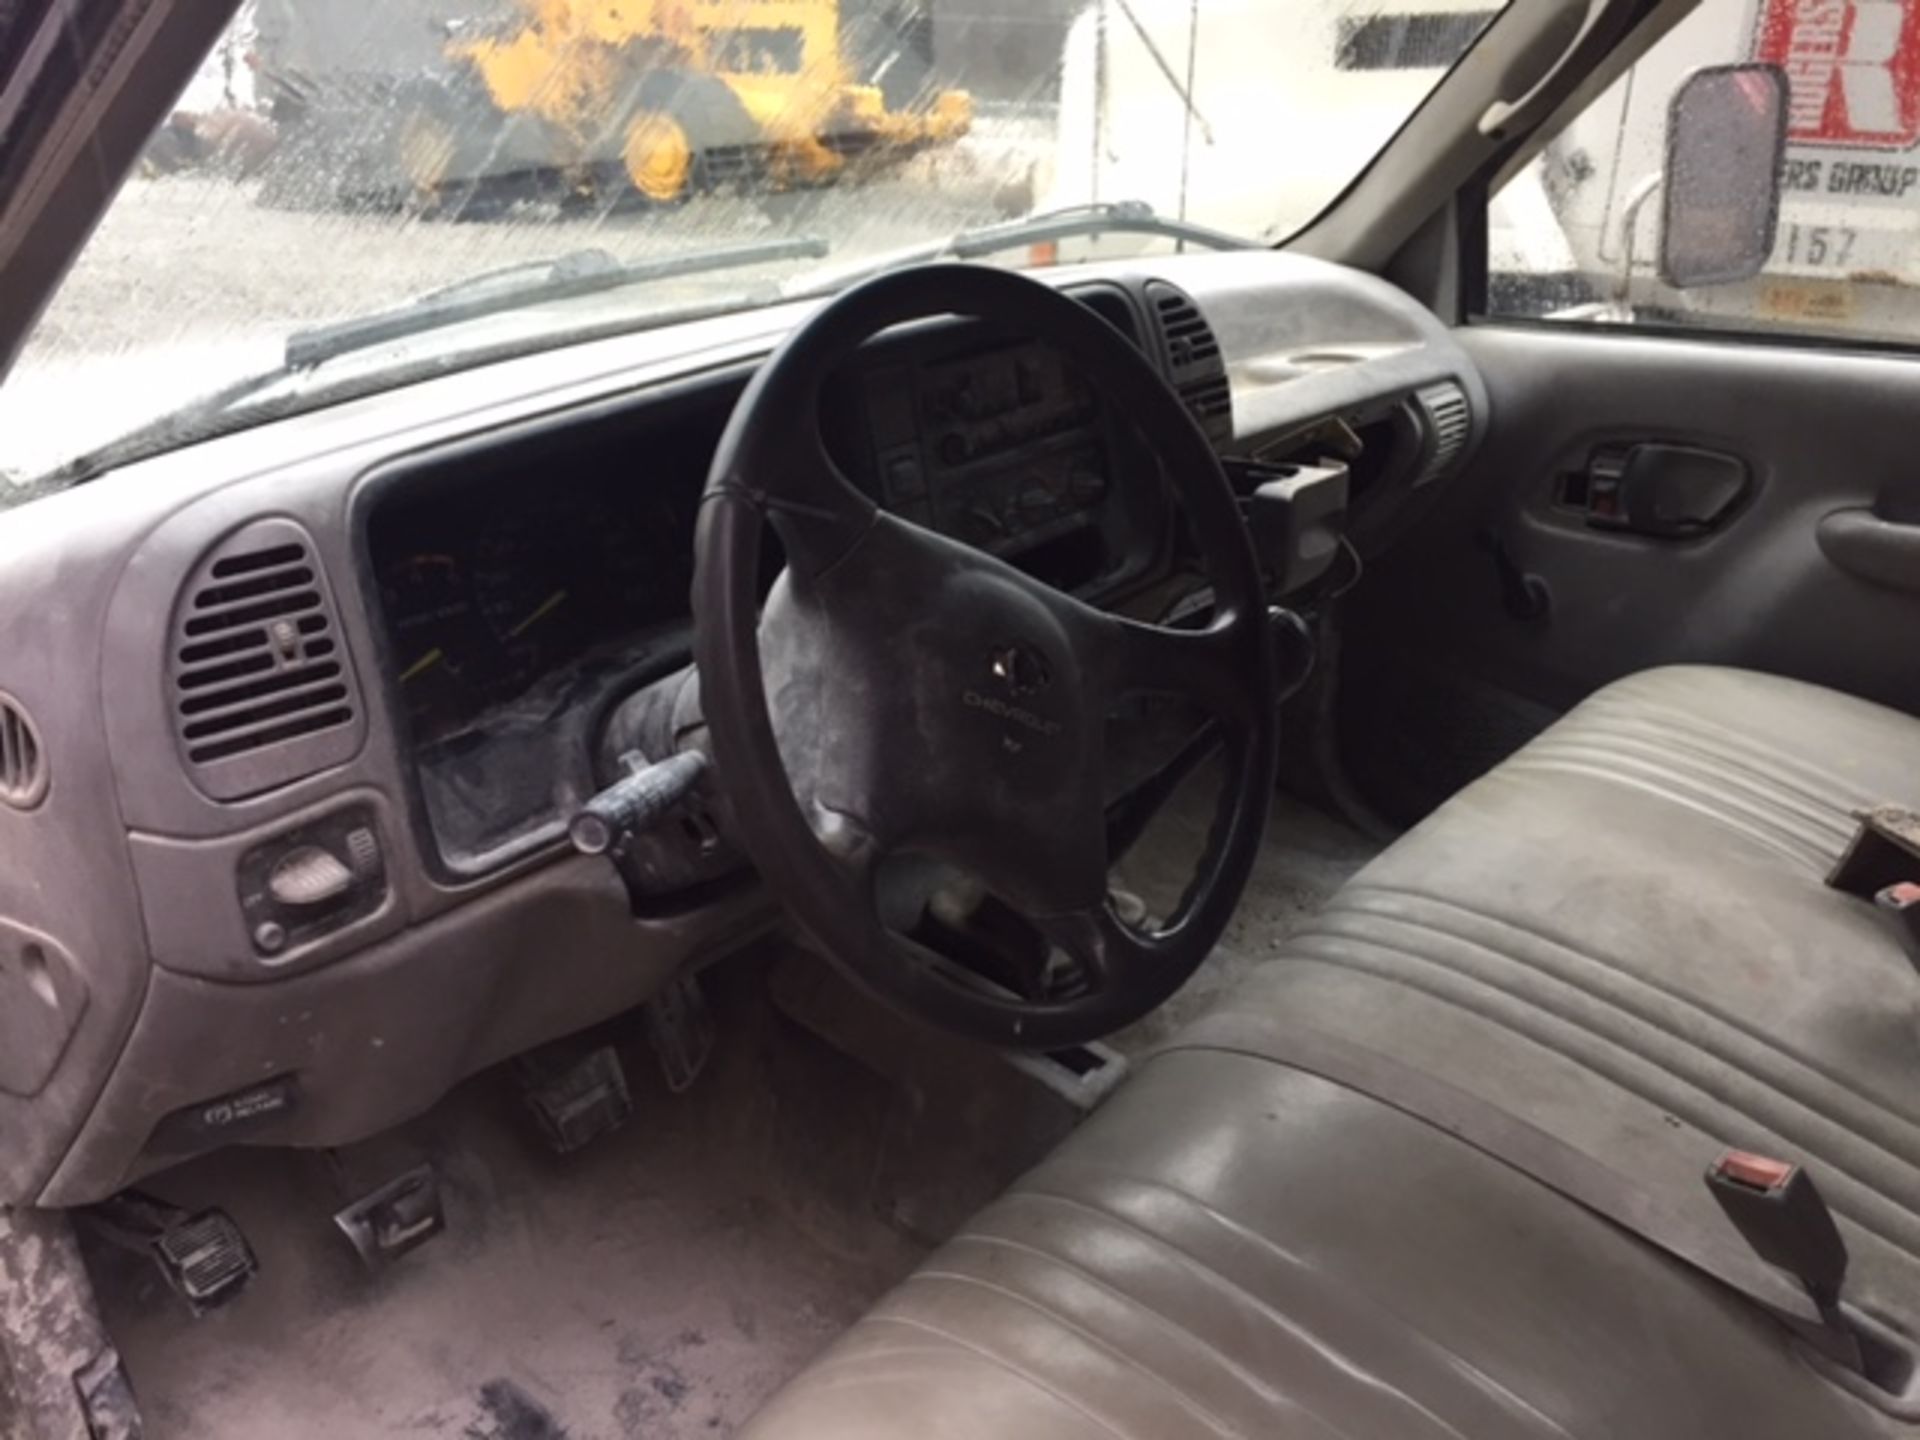 1995 Chevy 3500 Flatbed, Crew Cab, 4WD, 6.5 Diesel, 5sp. std. trans (Engine Knocks) - Image 4 of 5